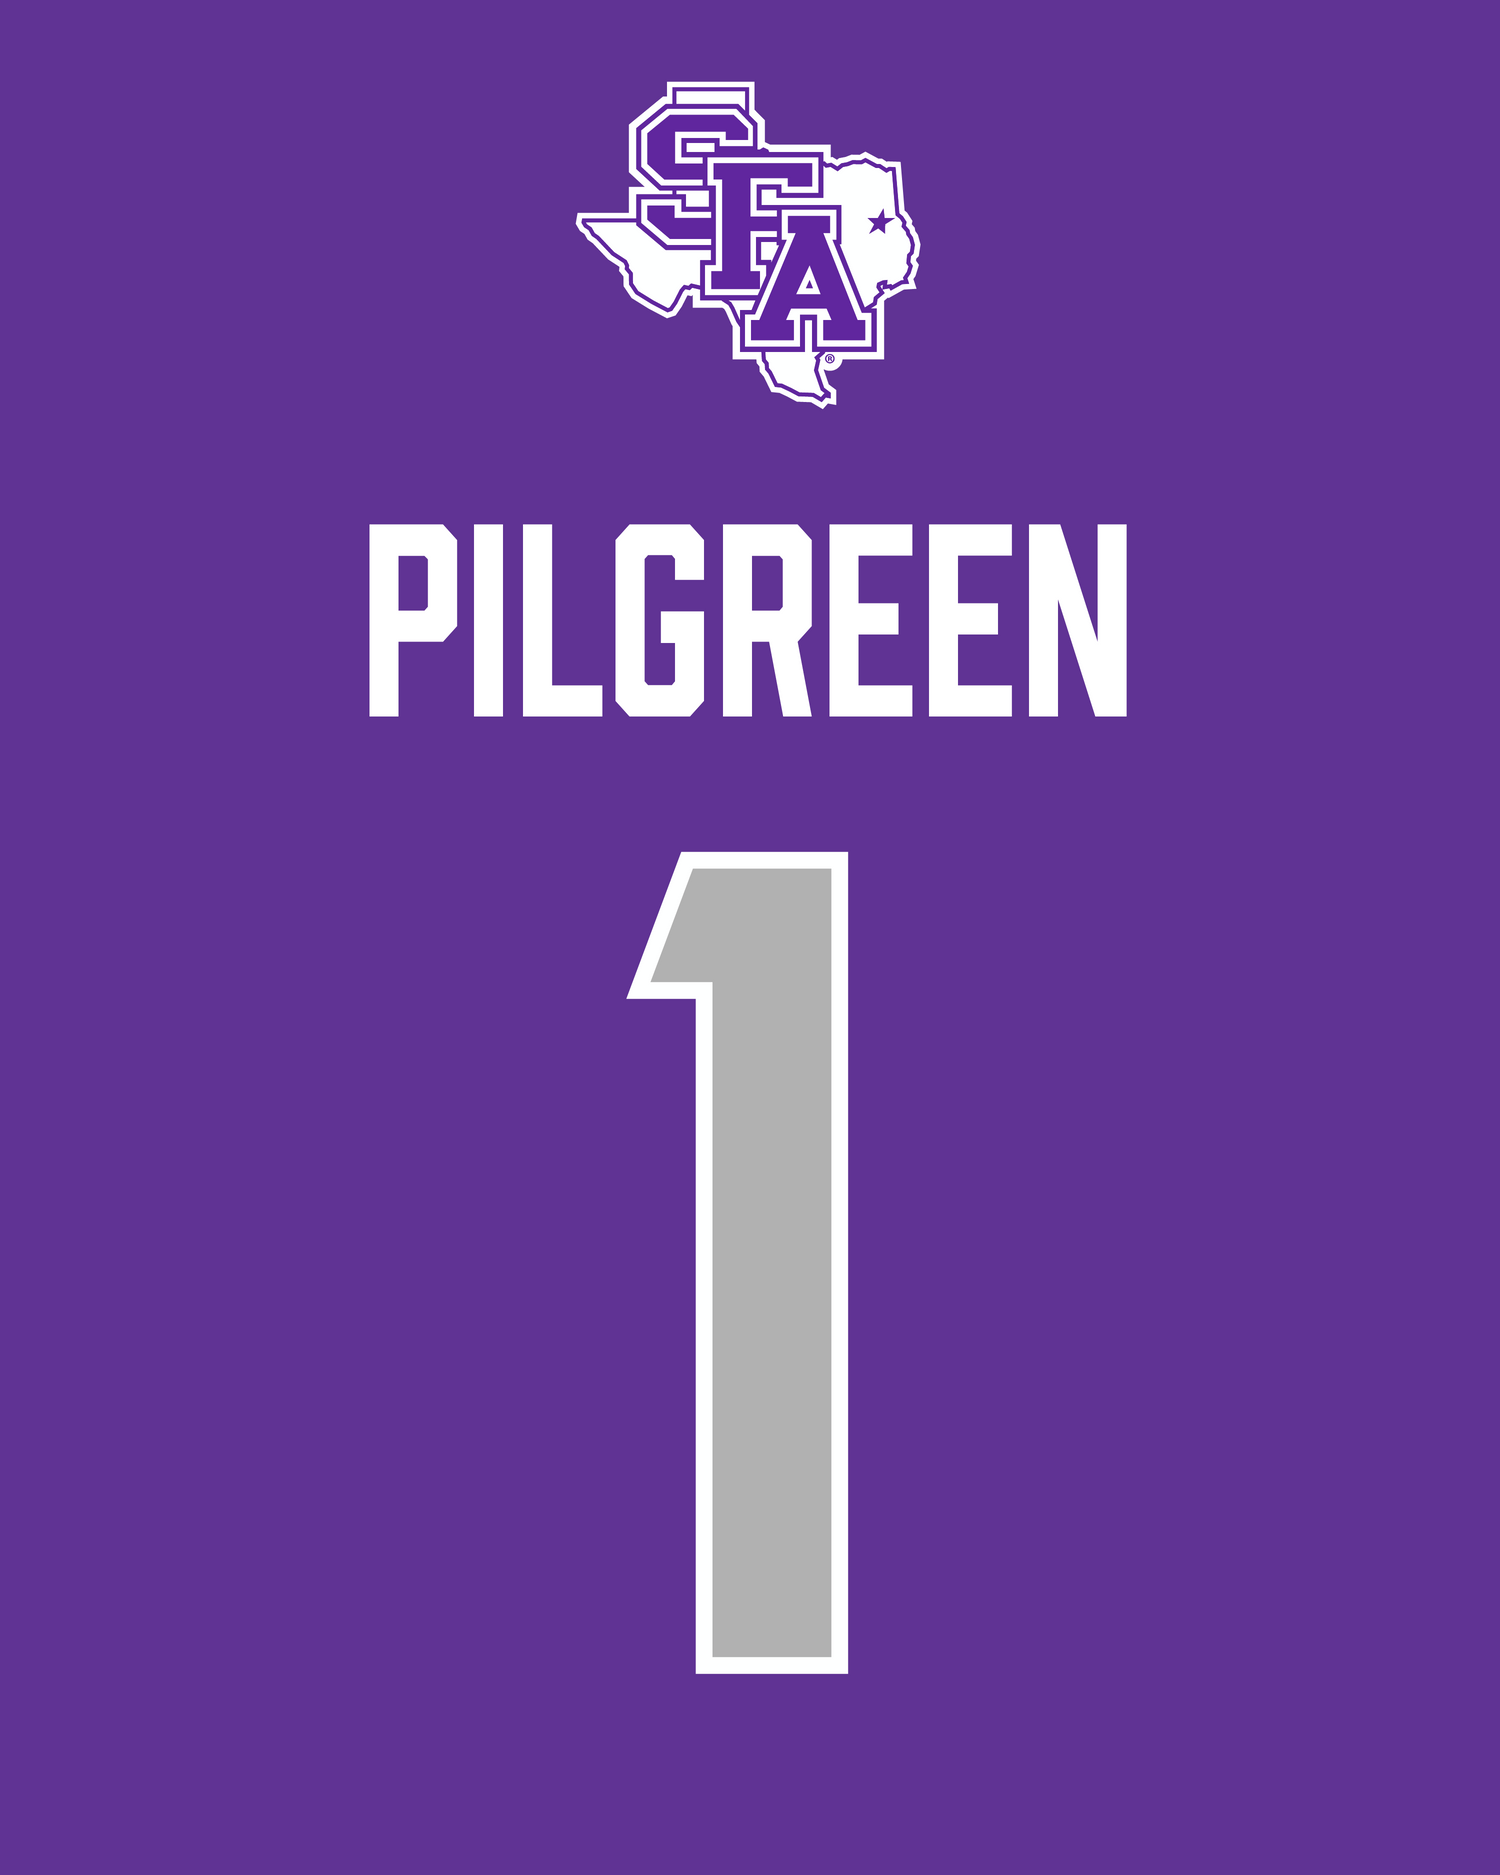 Logan Pilgreen | #1